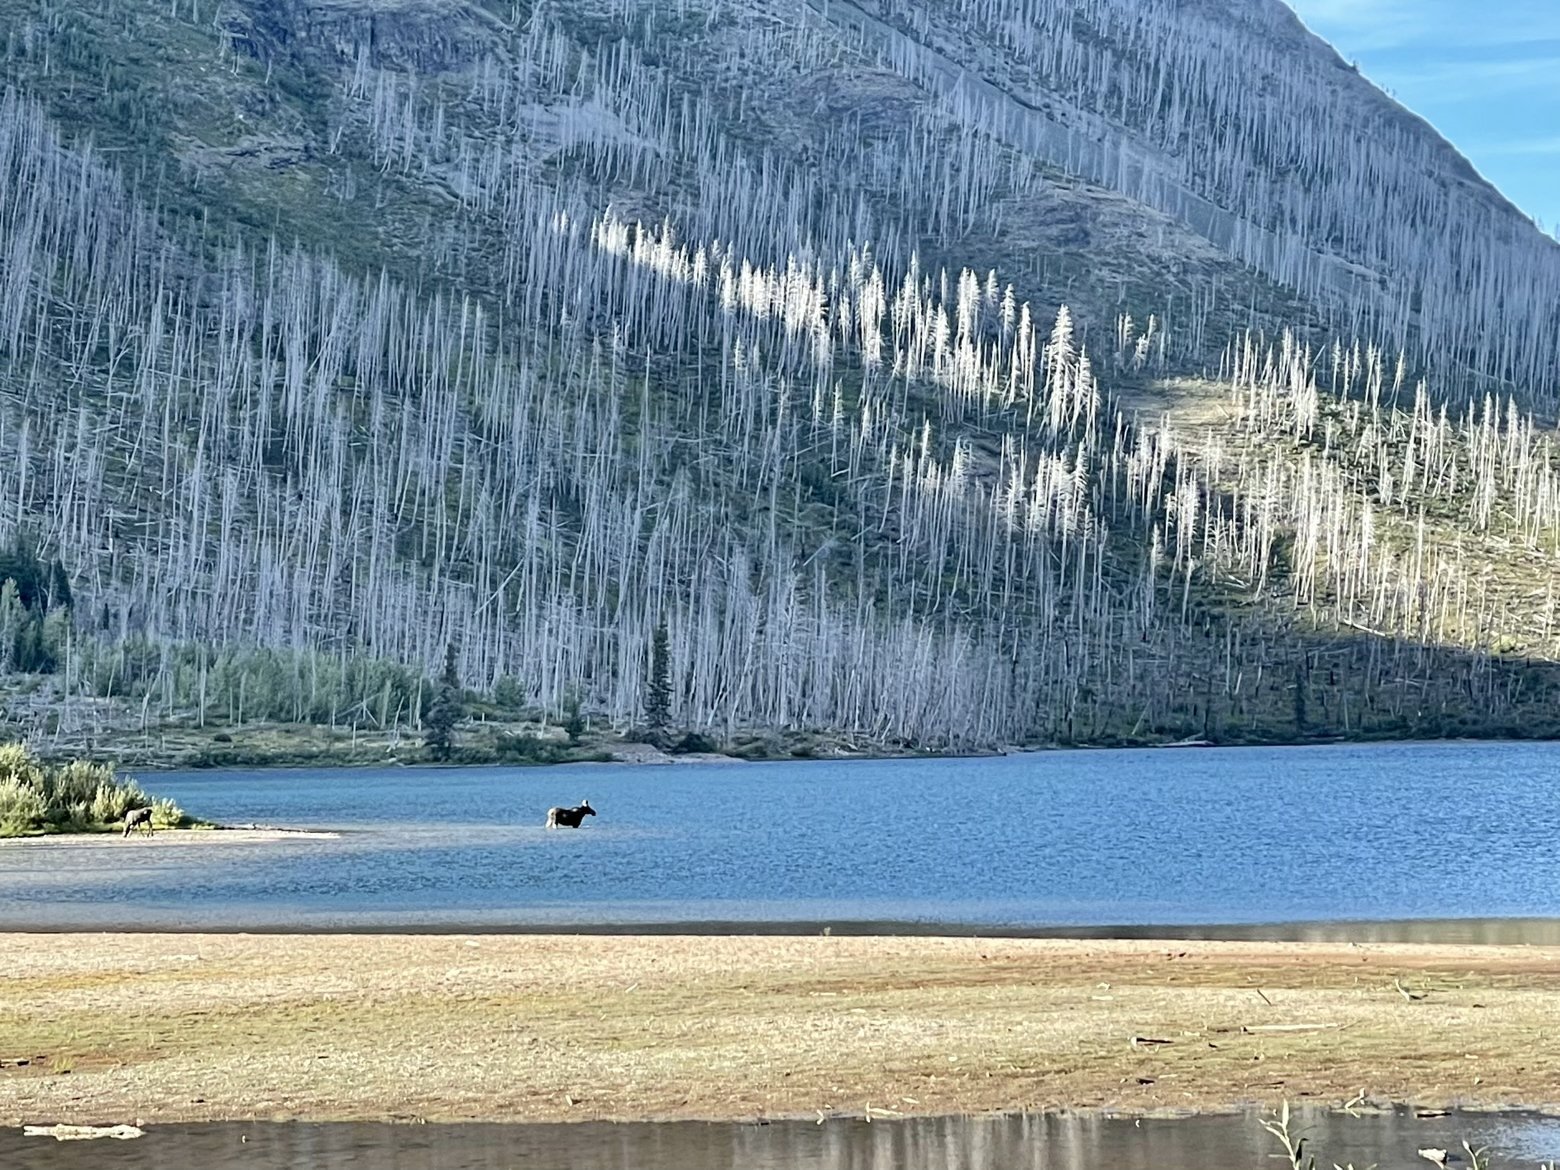 Moose wading into Red Eagle Lake